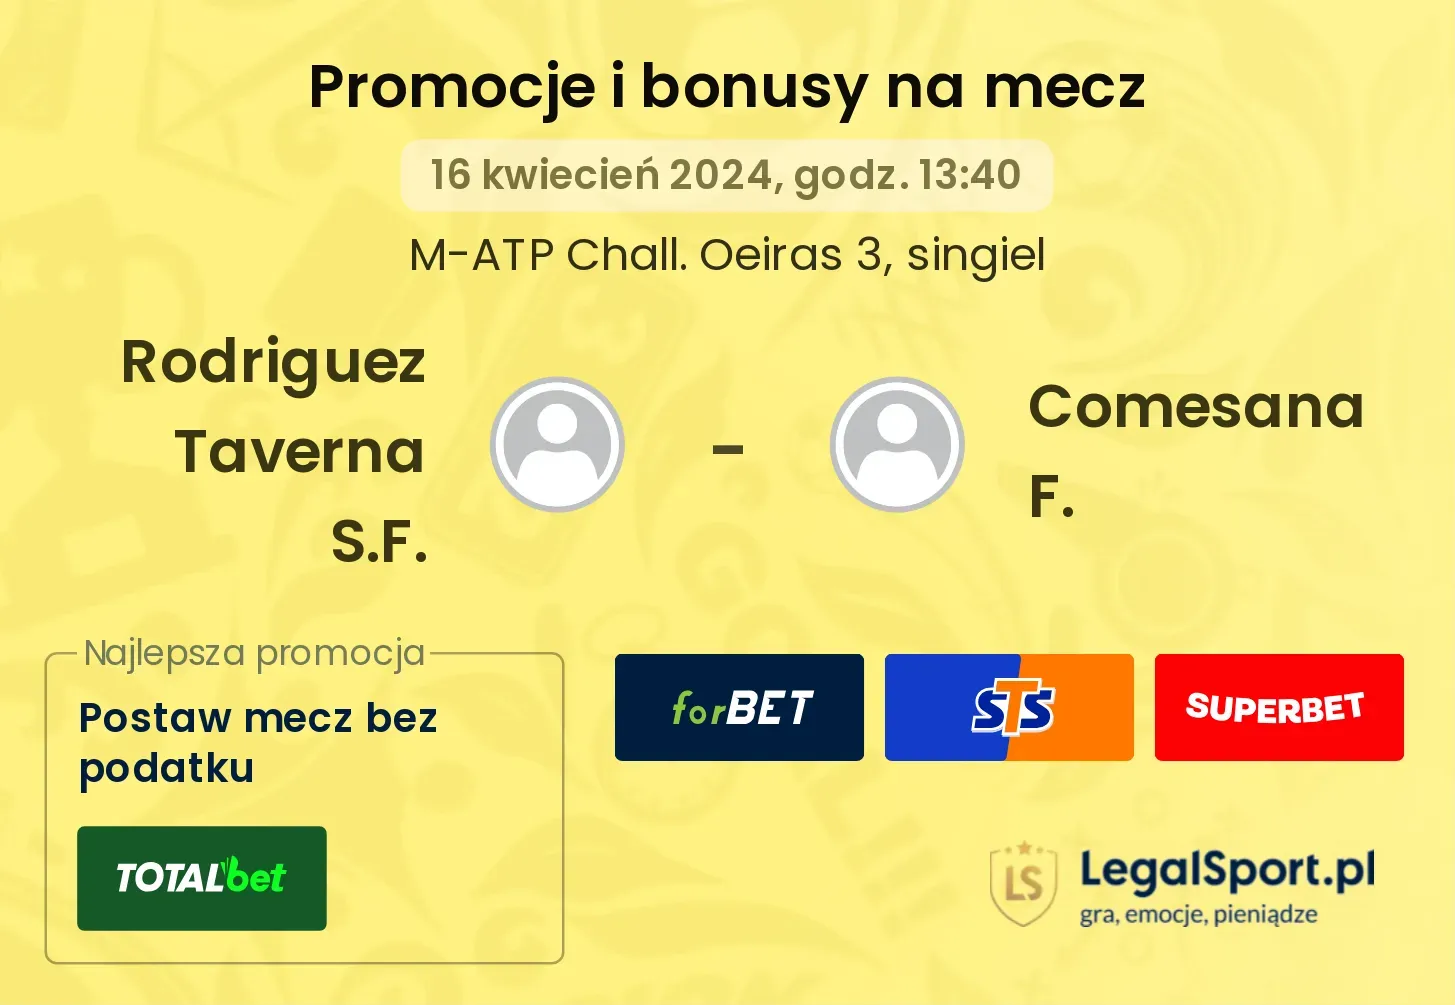 Rodriguez Taverna S.F. - Comesana F. promocje bonusy na mecz